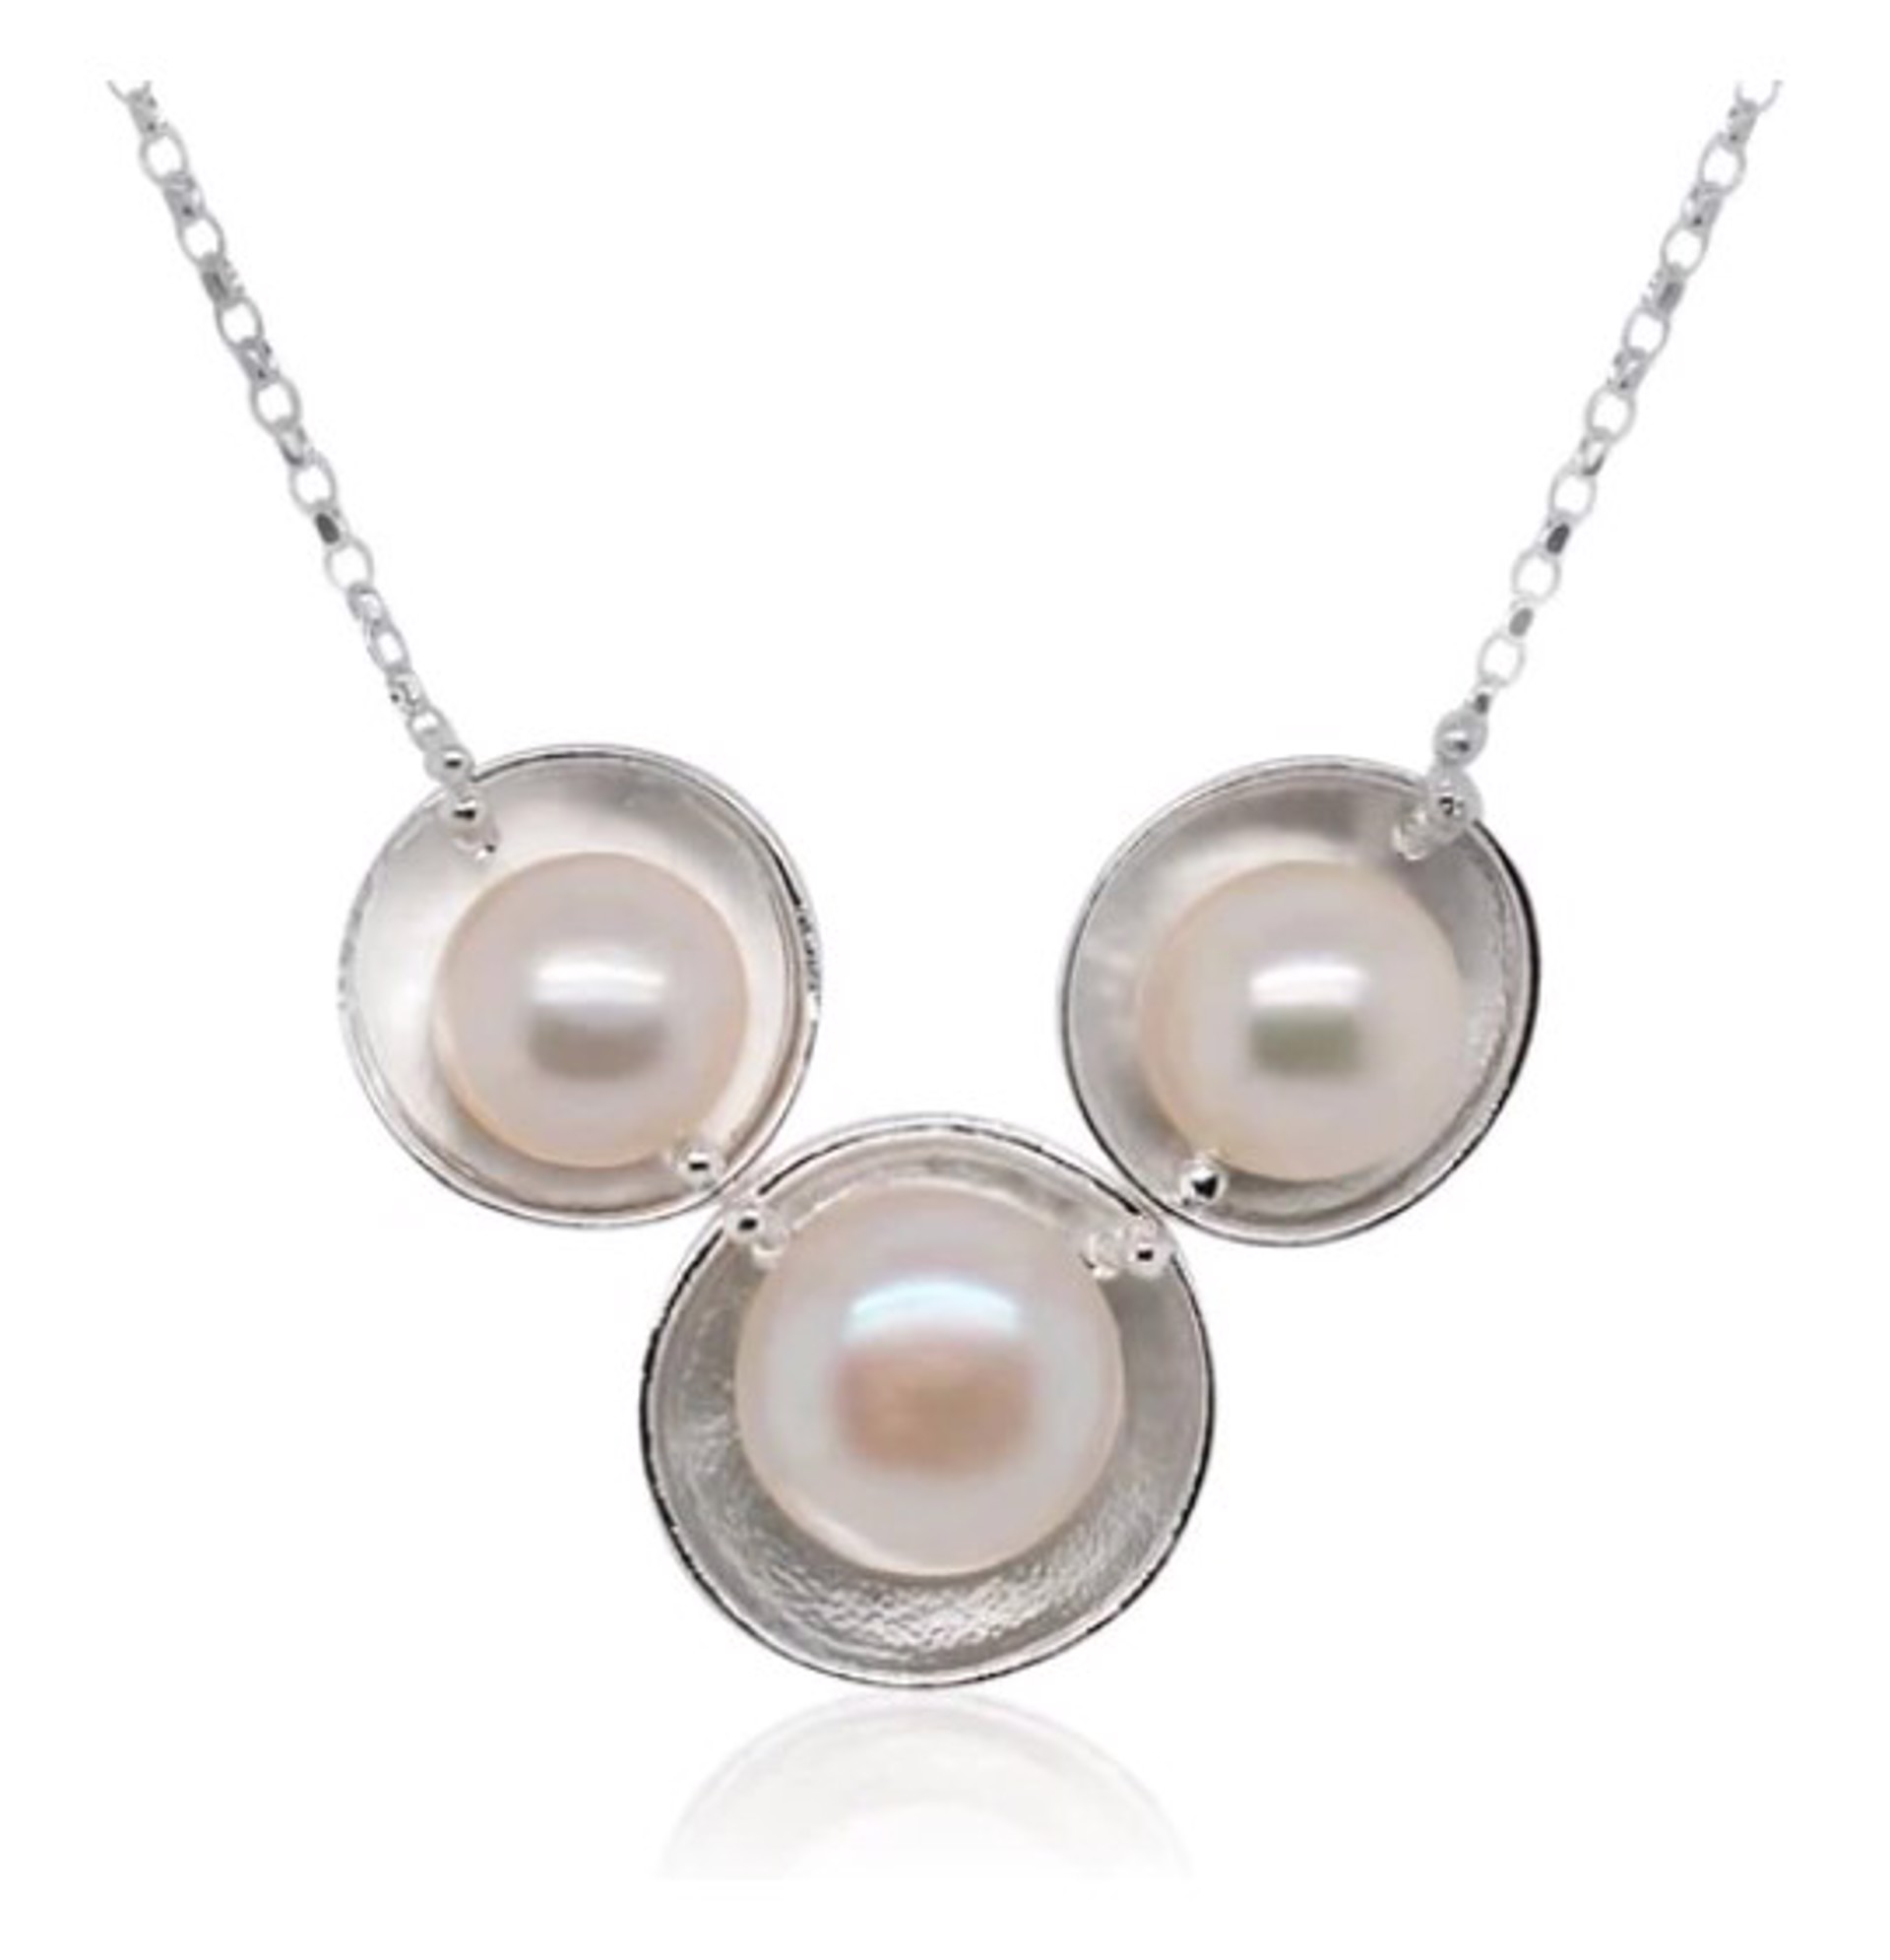 Triple Pearl Necklace by Kristen Baird